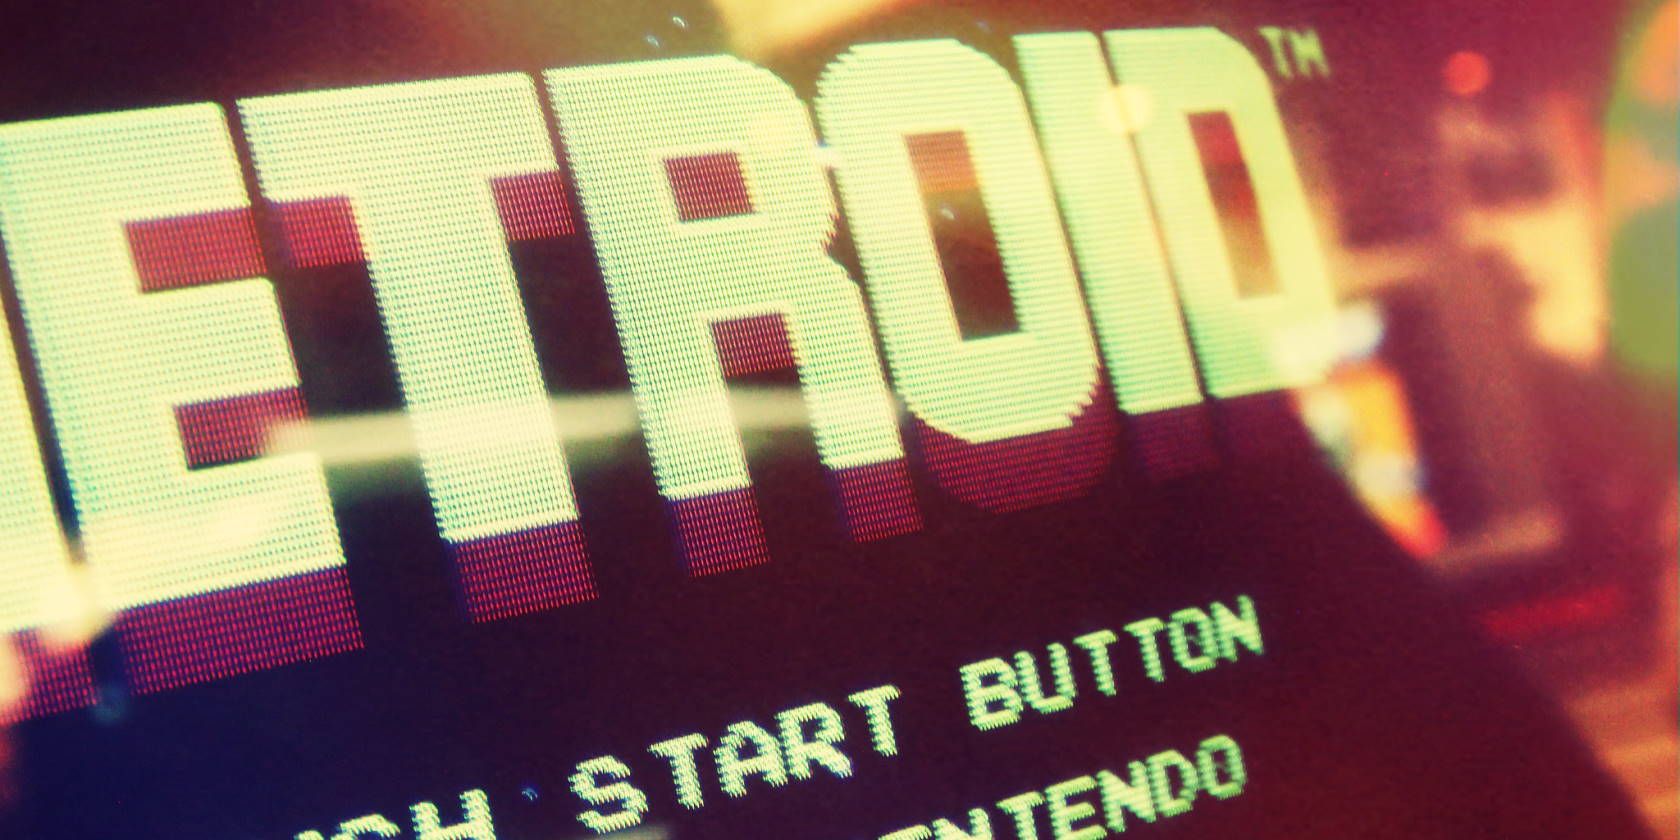 Metroid start screen